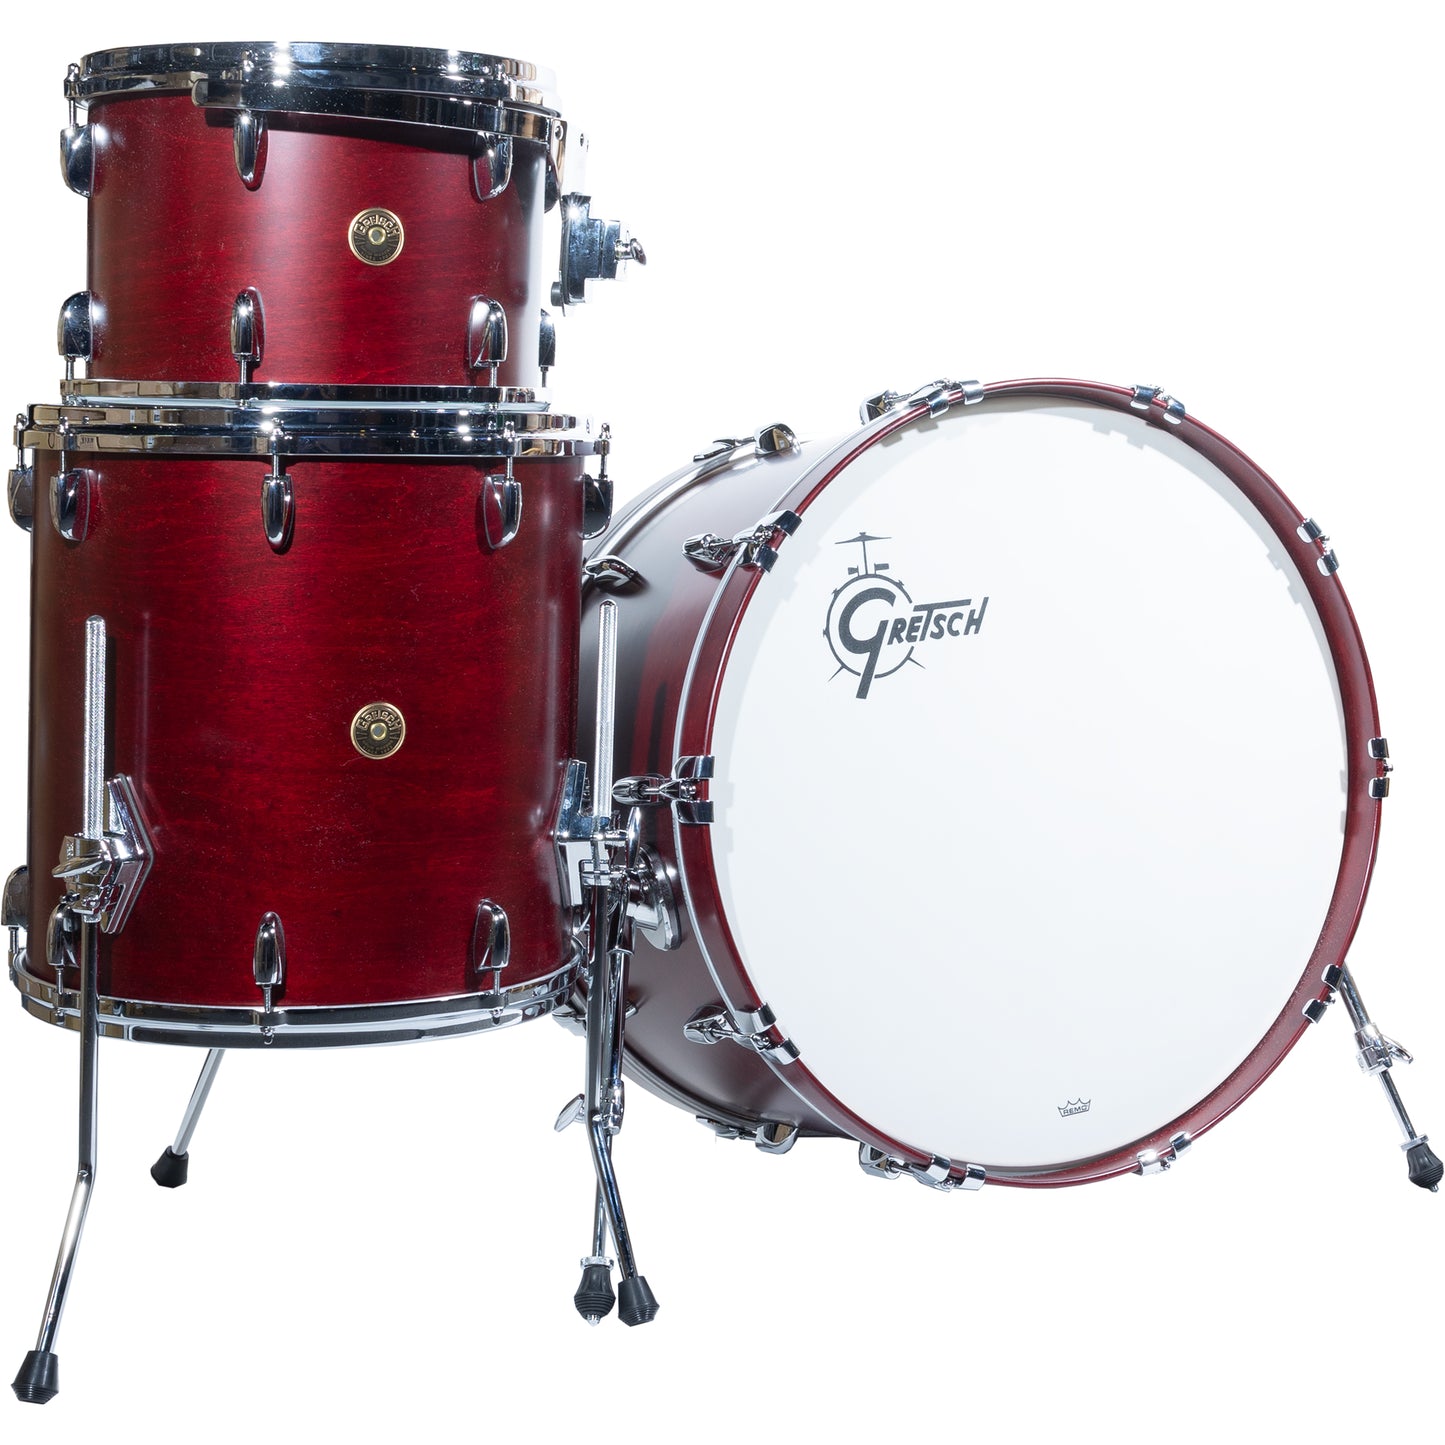 Gretsch USA Custom 3-Piece Drum Kit - Satin Rosewood